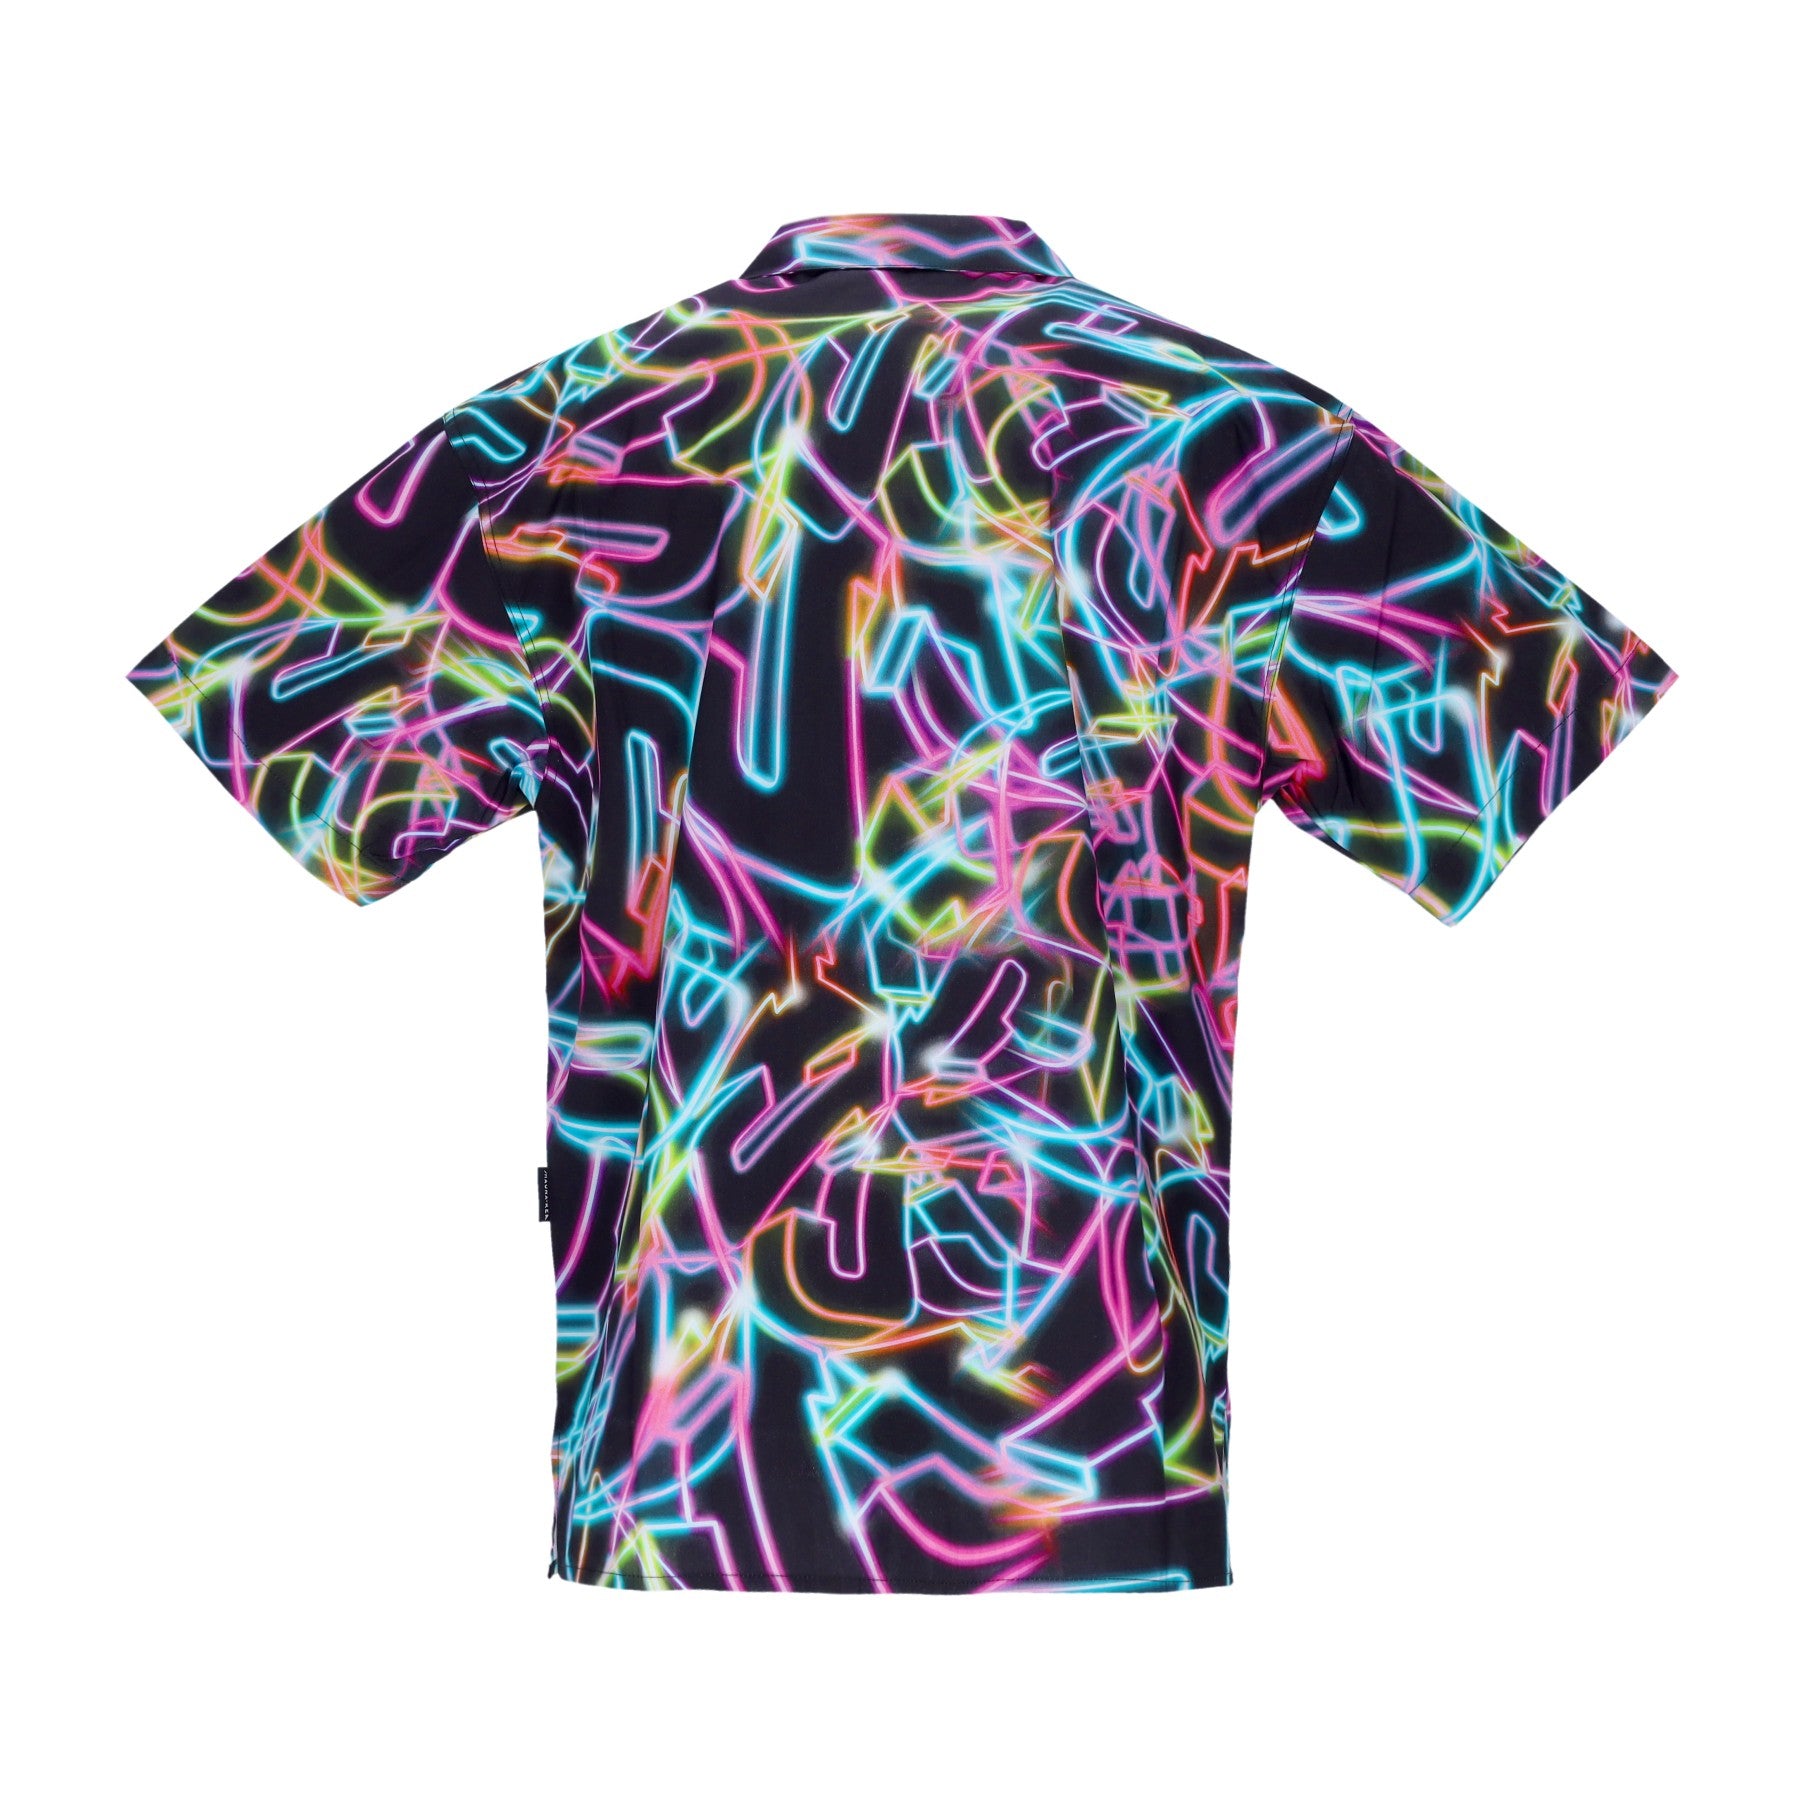 Mauna-kea, Camicia Manica Corta Uomo Neon Bowling Shirt X Triple J, Black/multi